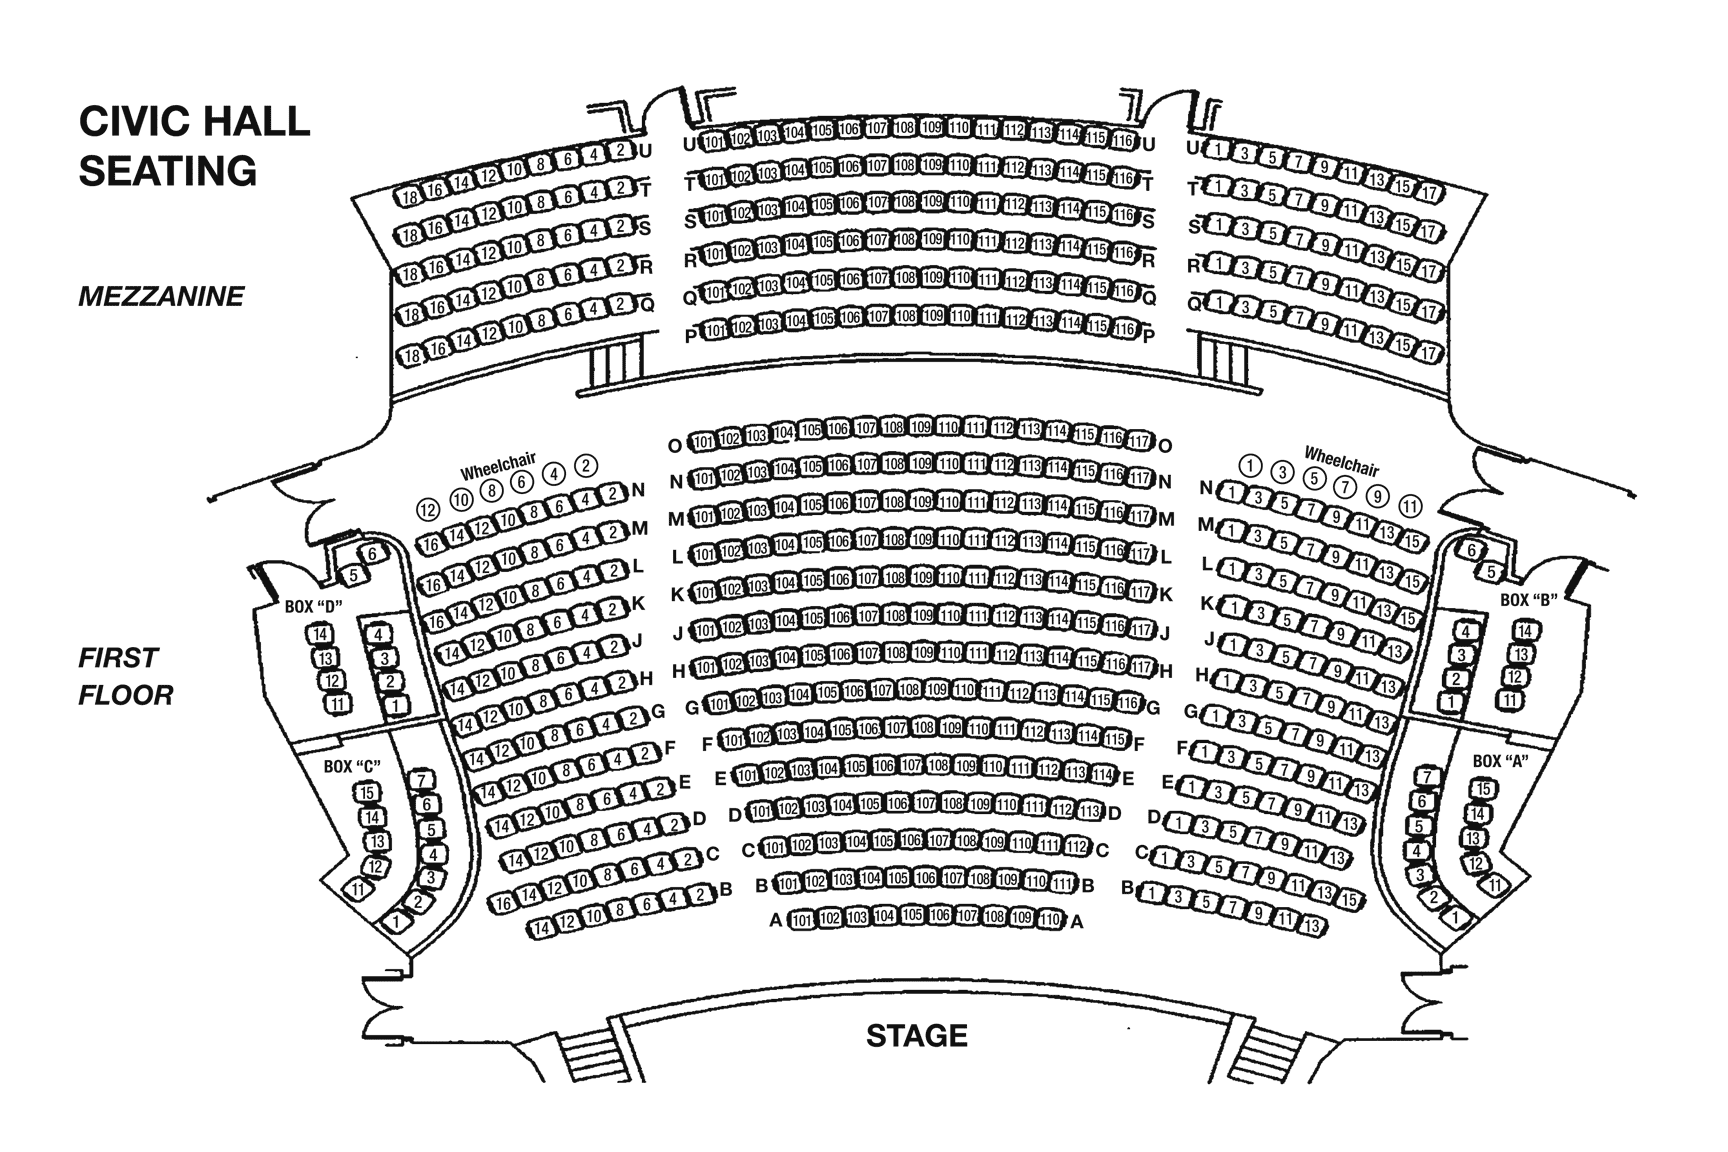 Seating Chart 1